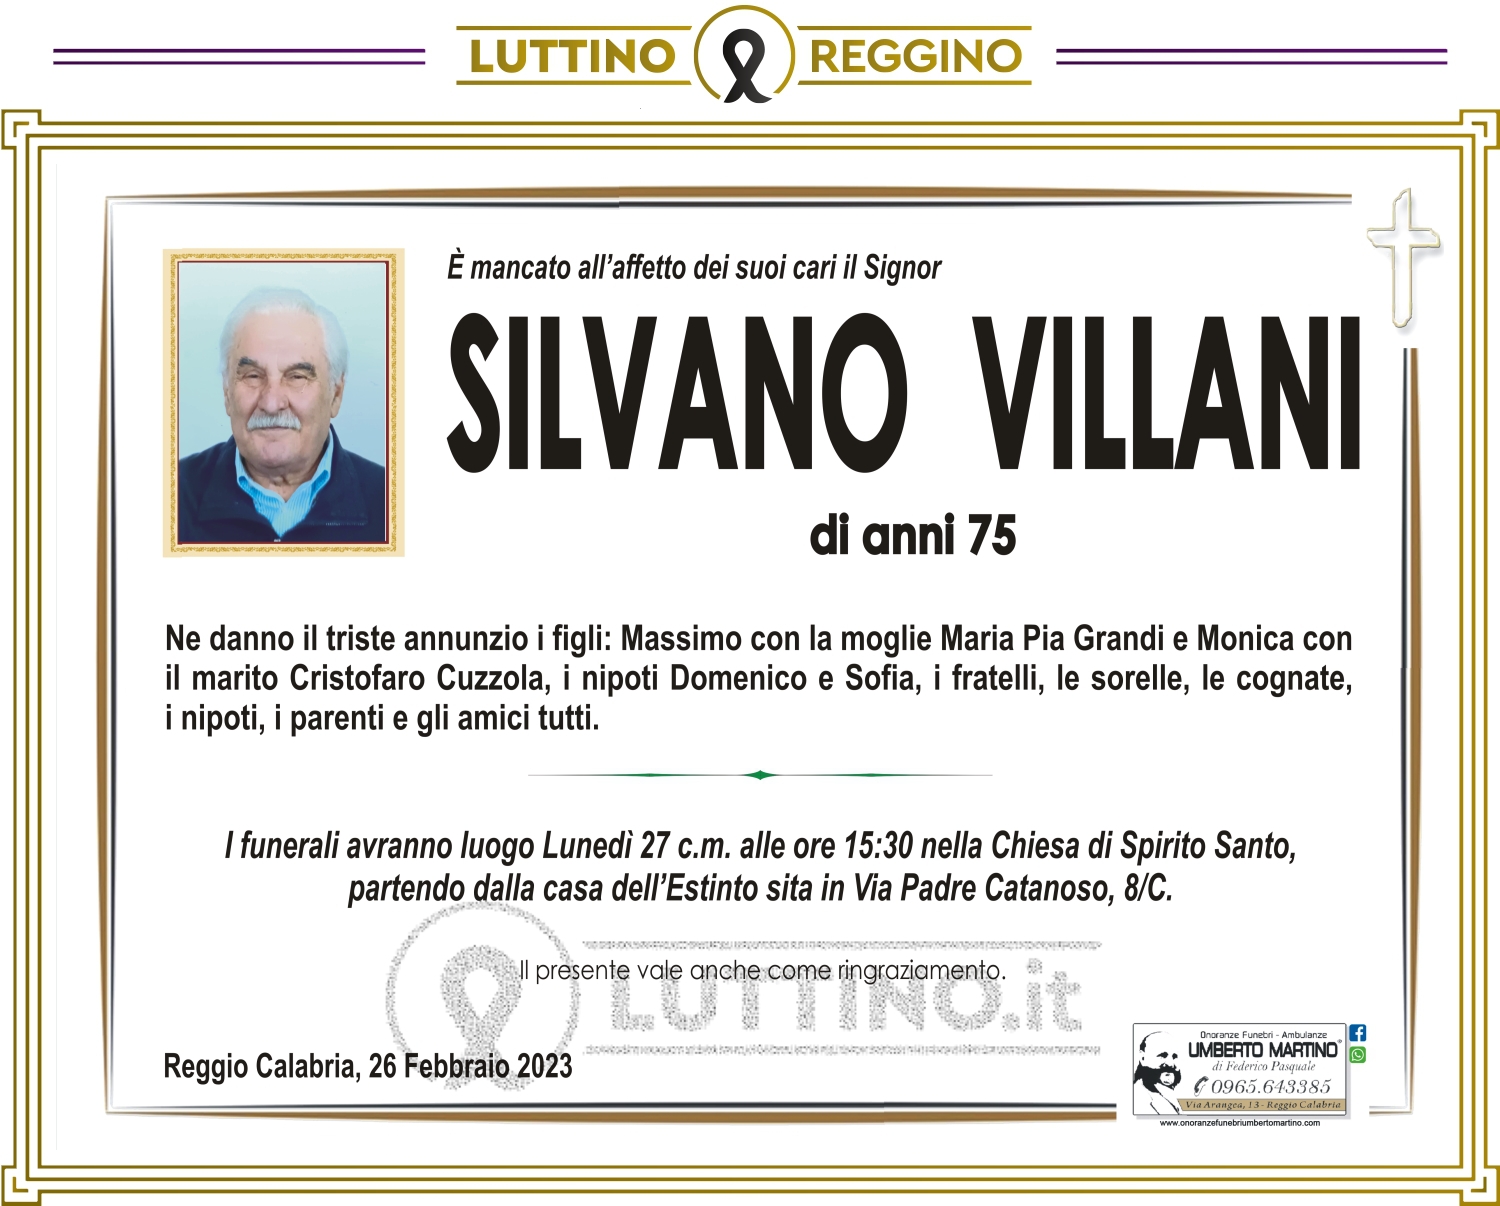 Silvano Villani